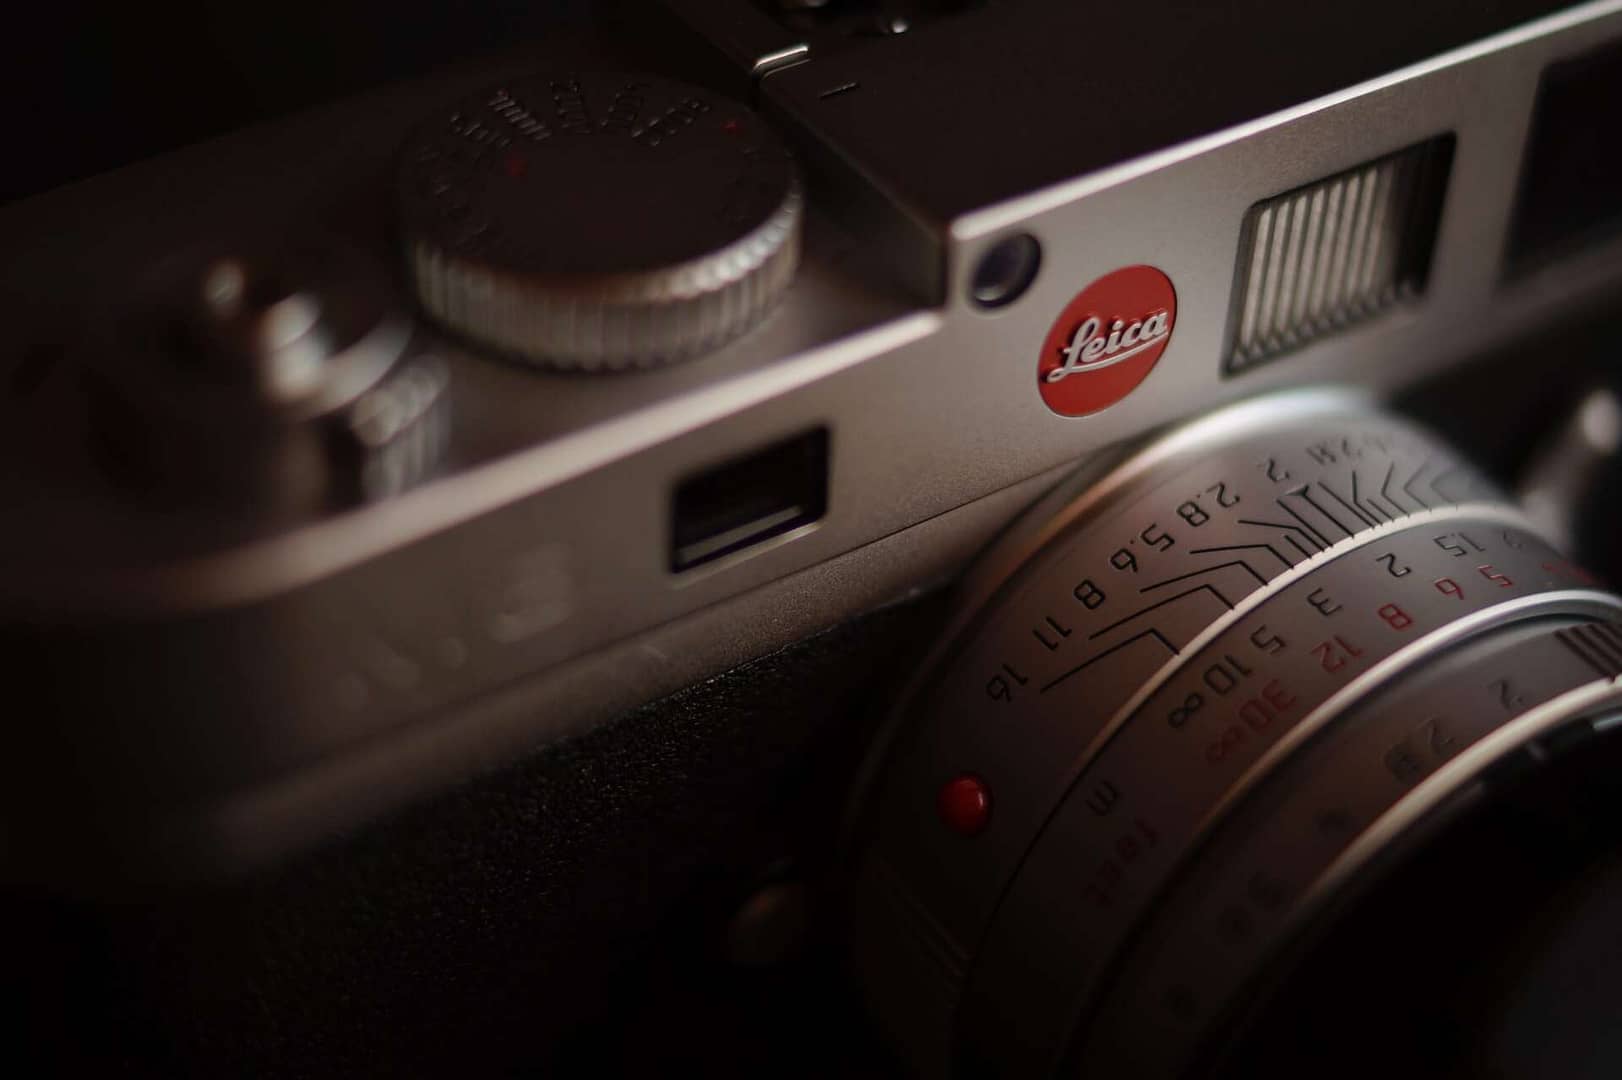 Leica Cameras: Why Photographers Love Their Quality, Precision, and Timeless Design